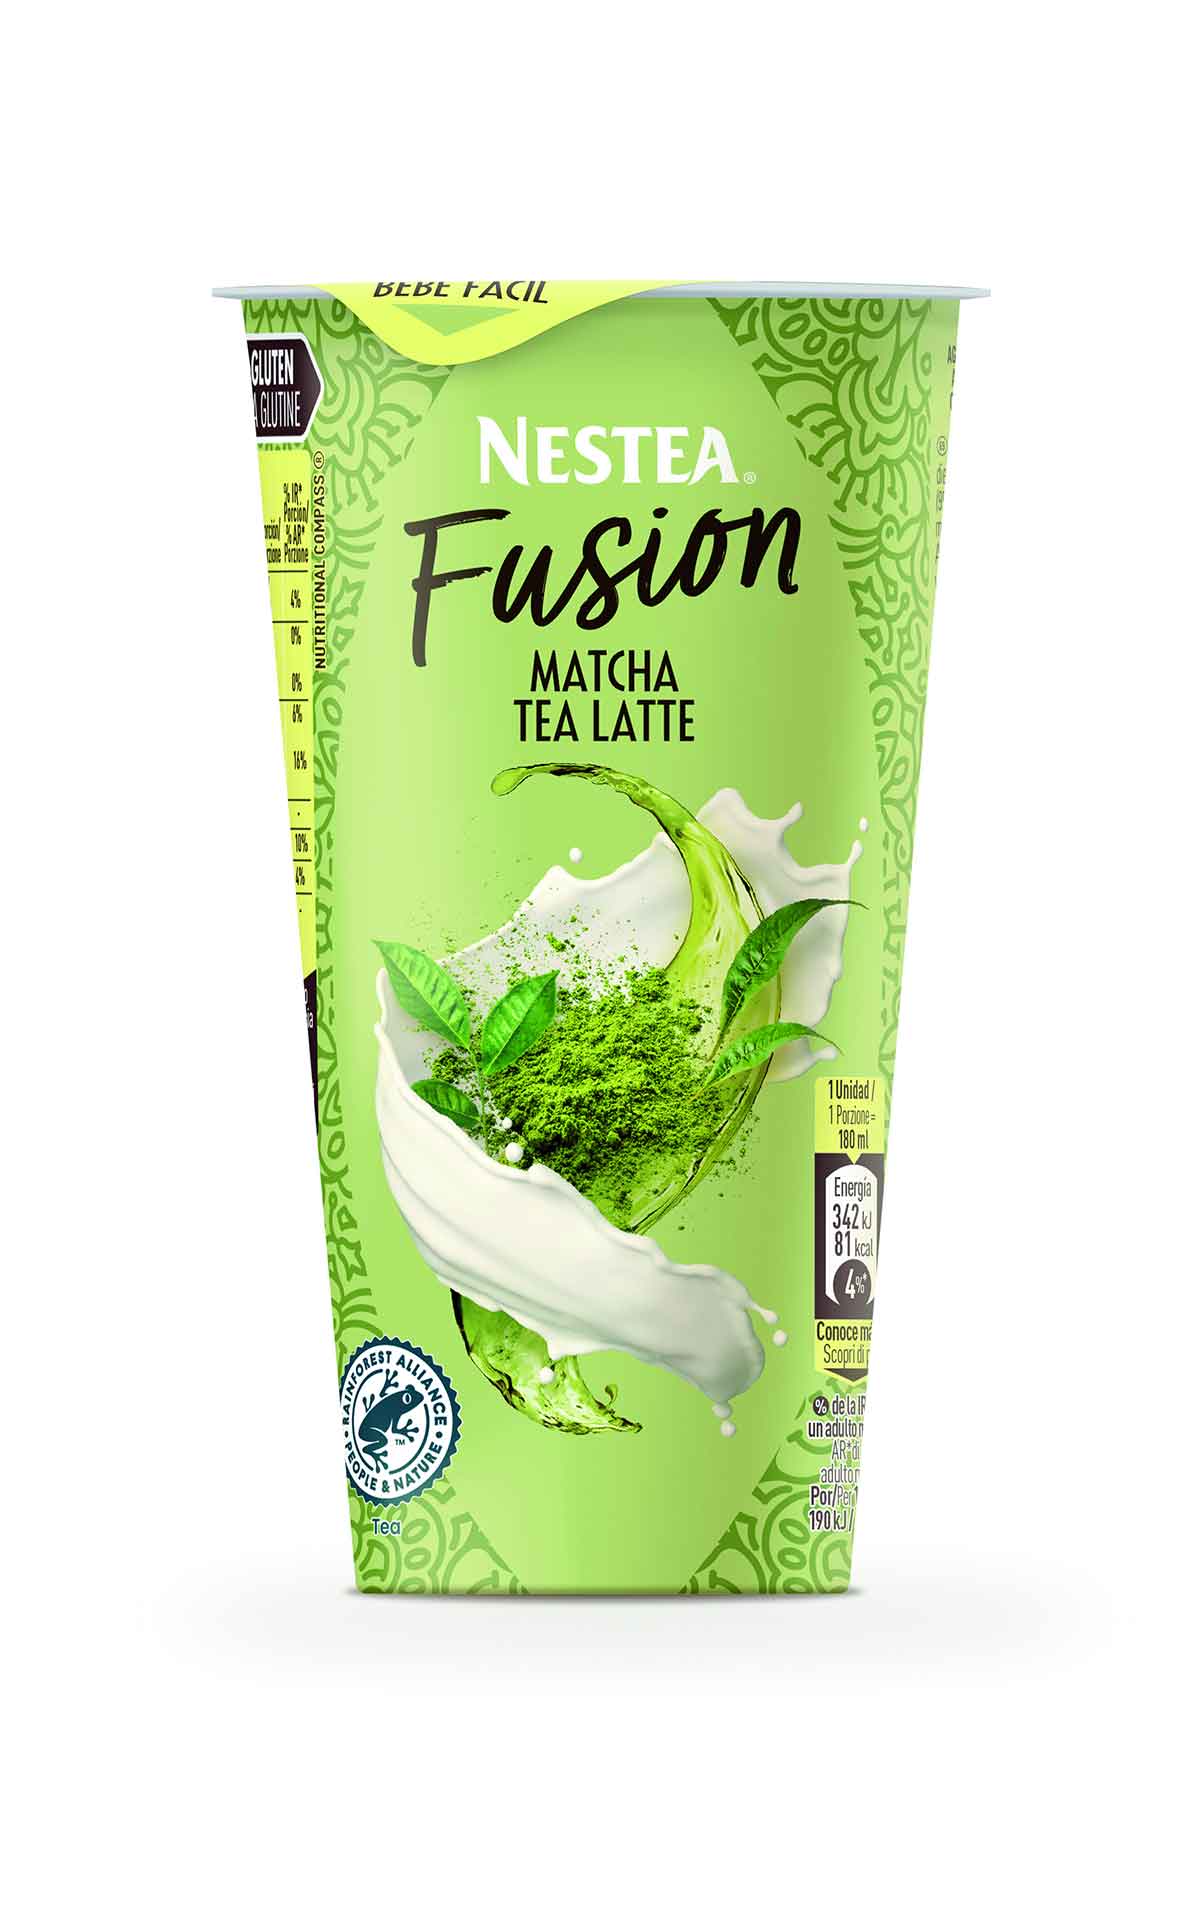 Nestea Fusion Matcha Tea Latte